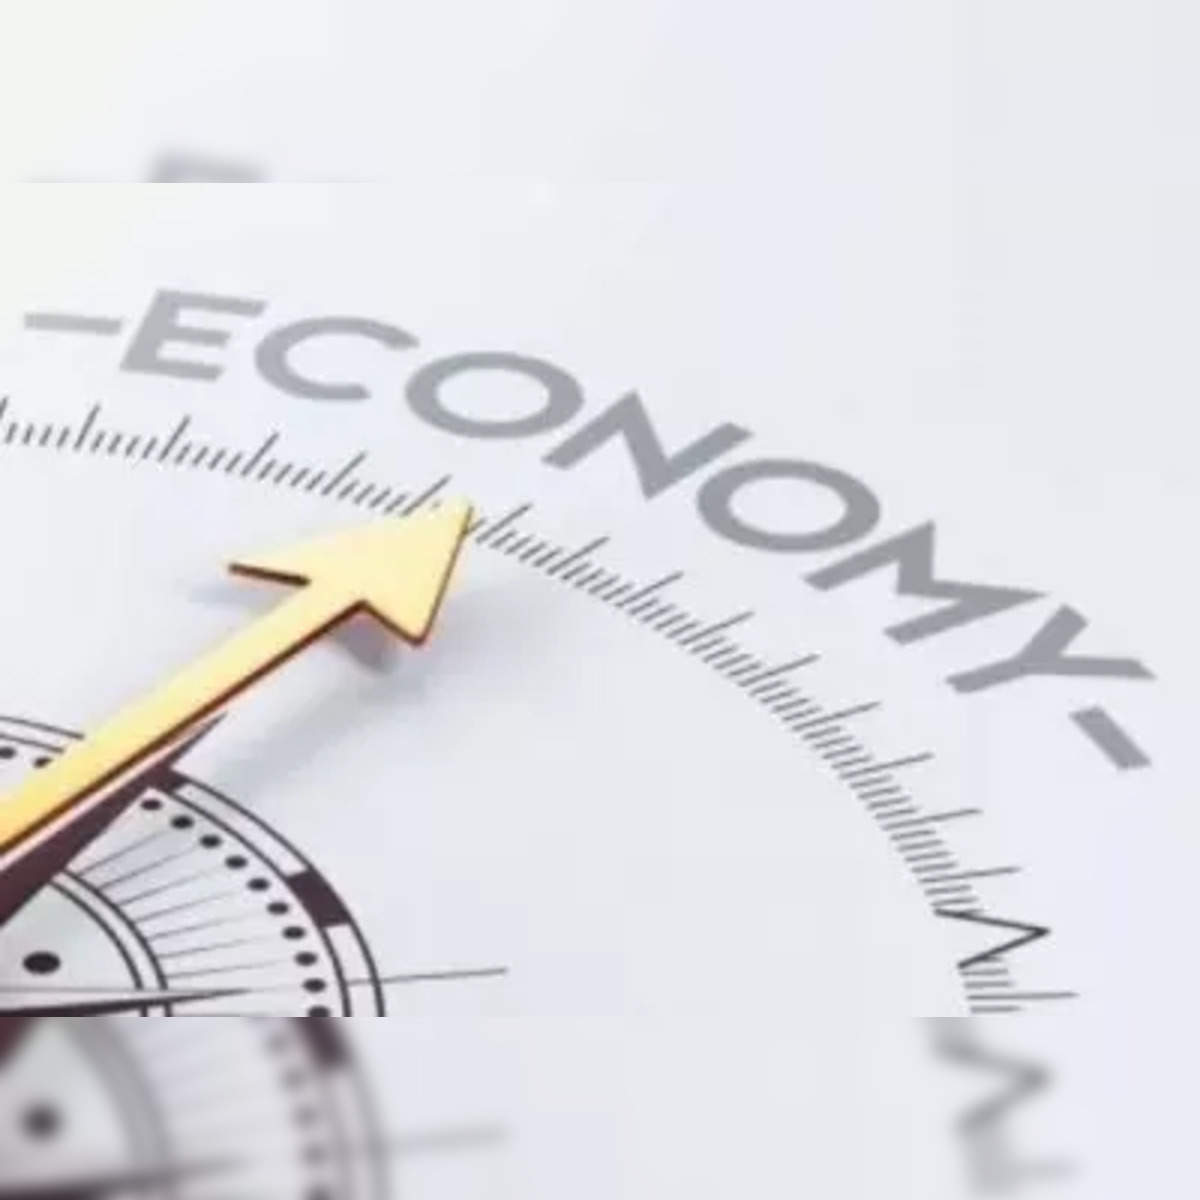 Economy Watch - September 2022